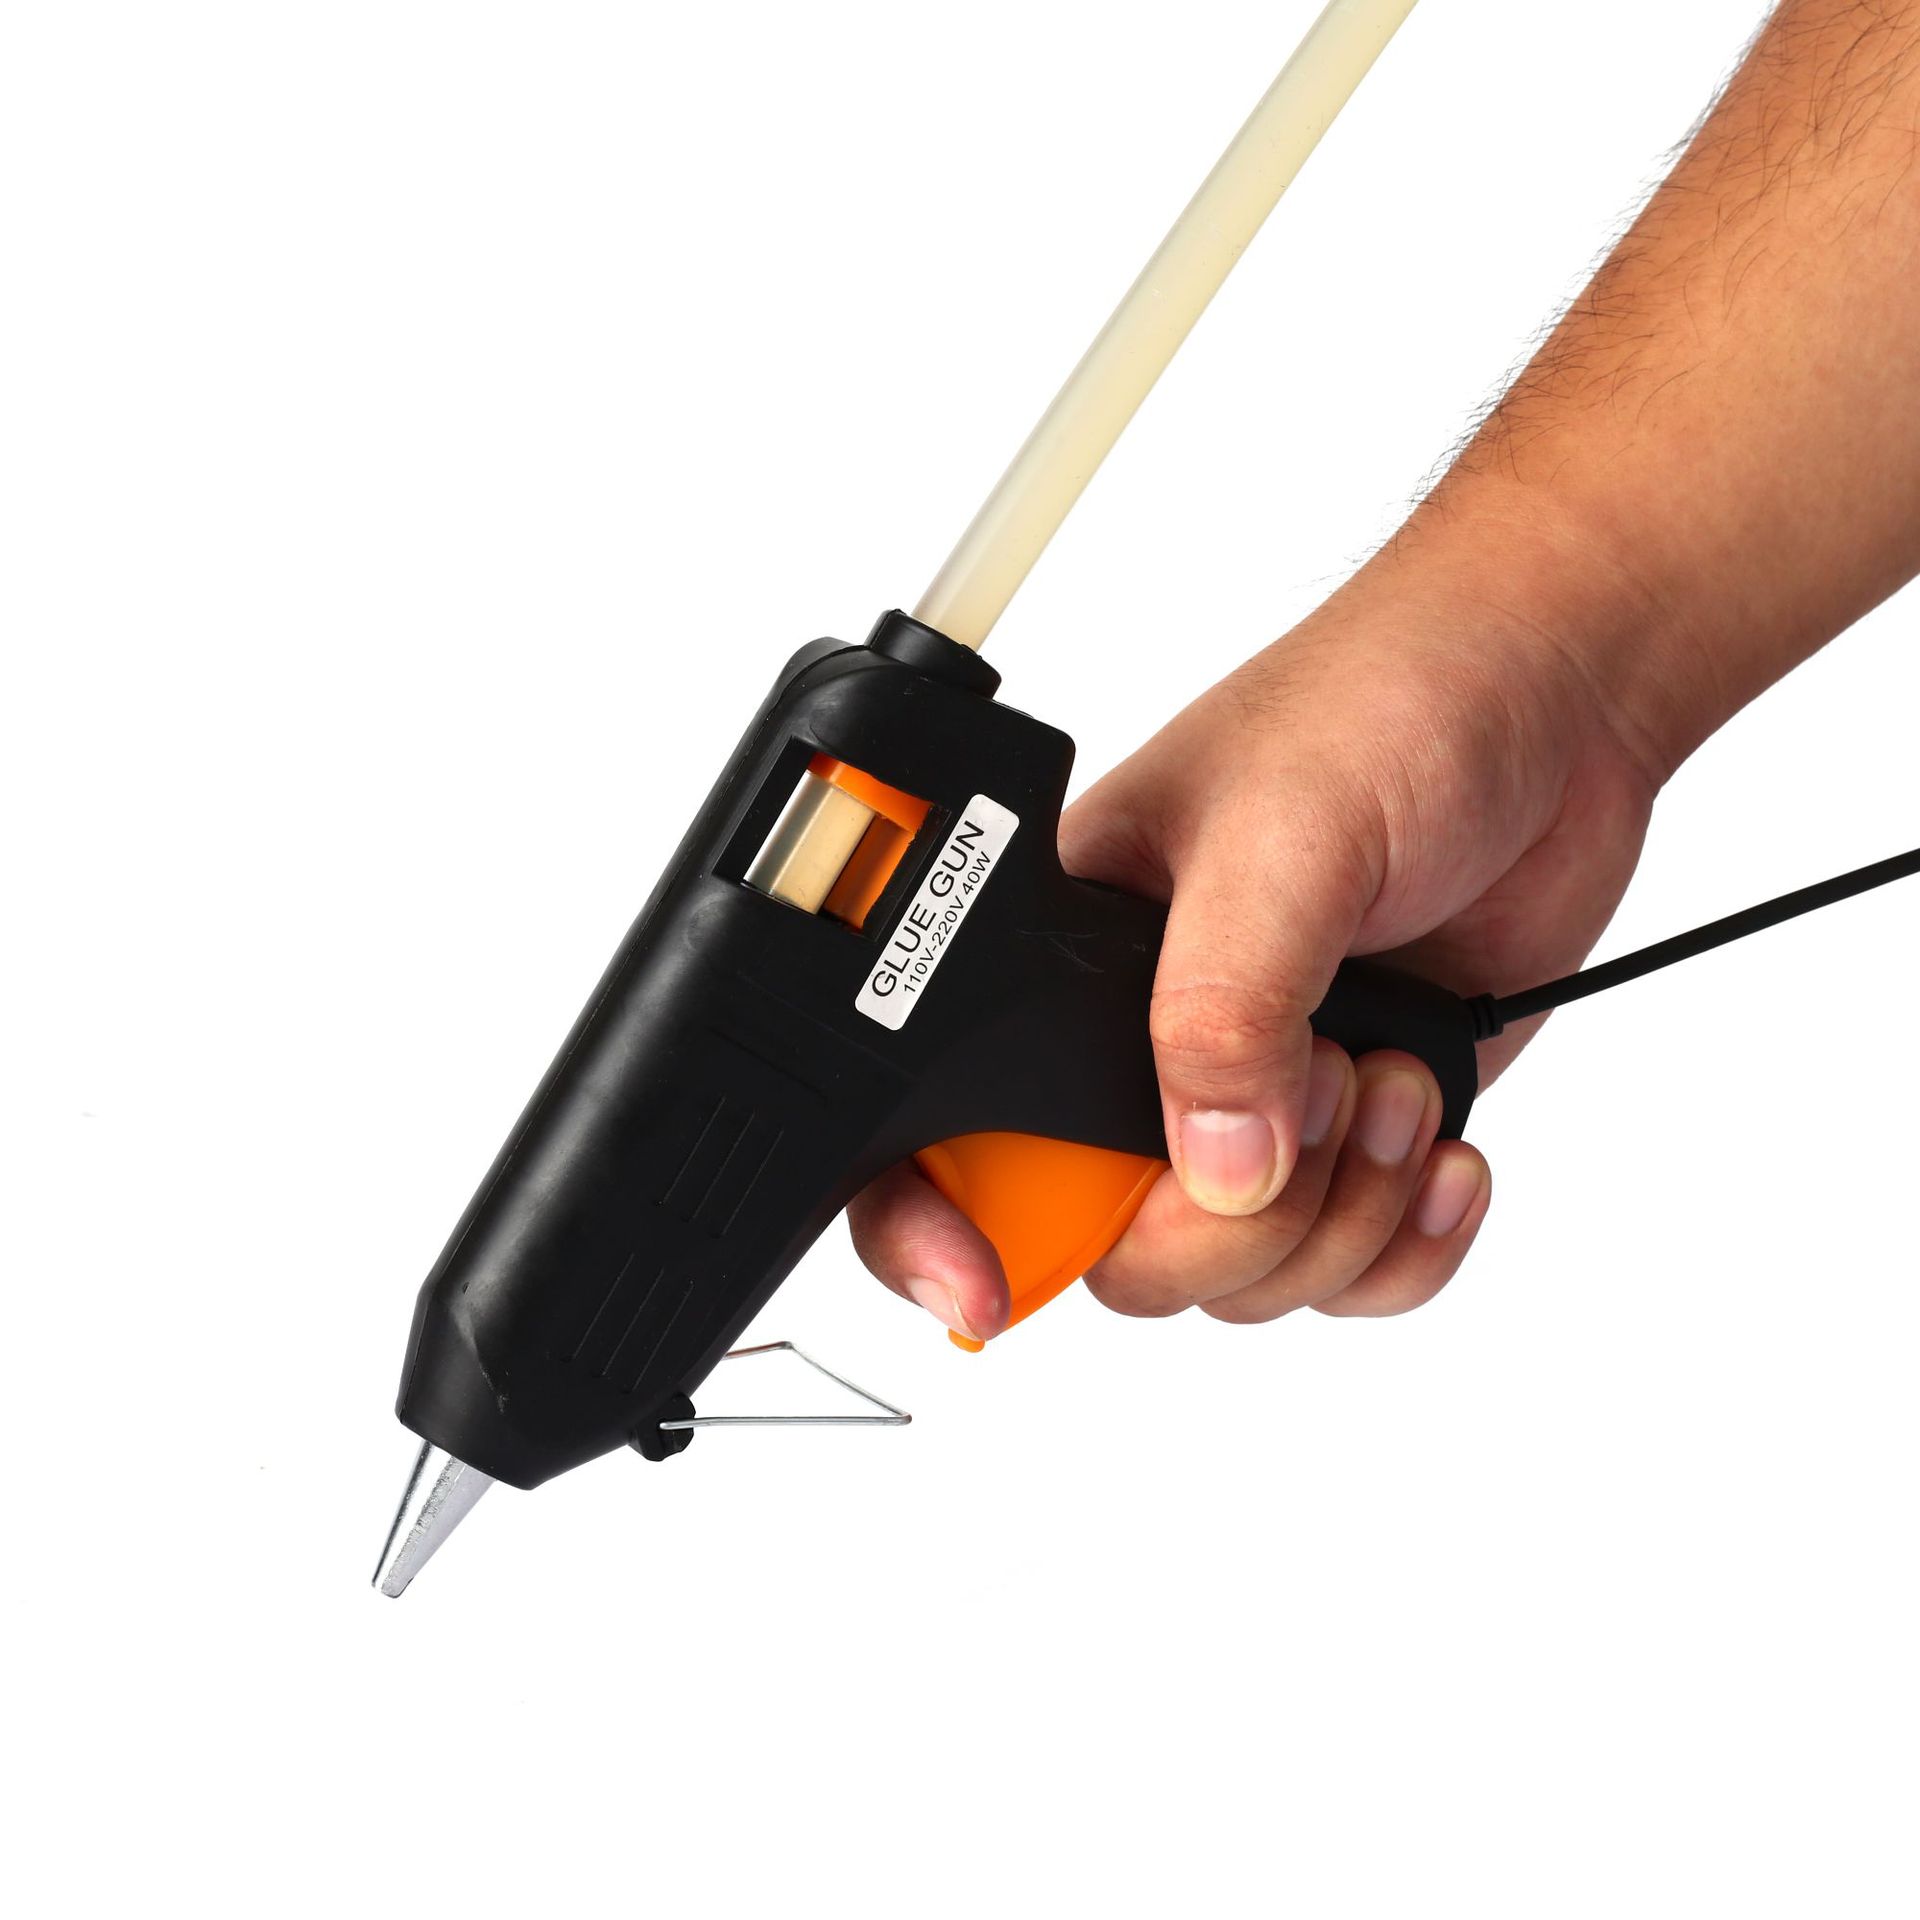 Supplier Full Size Small Hot Melt Glue Gun With Glue Sticks For Crafts